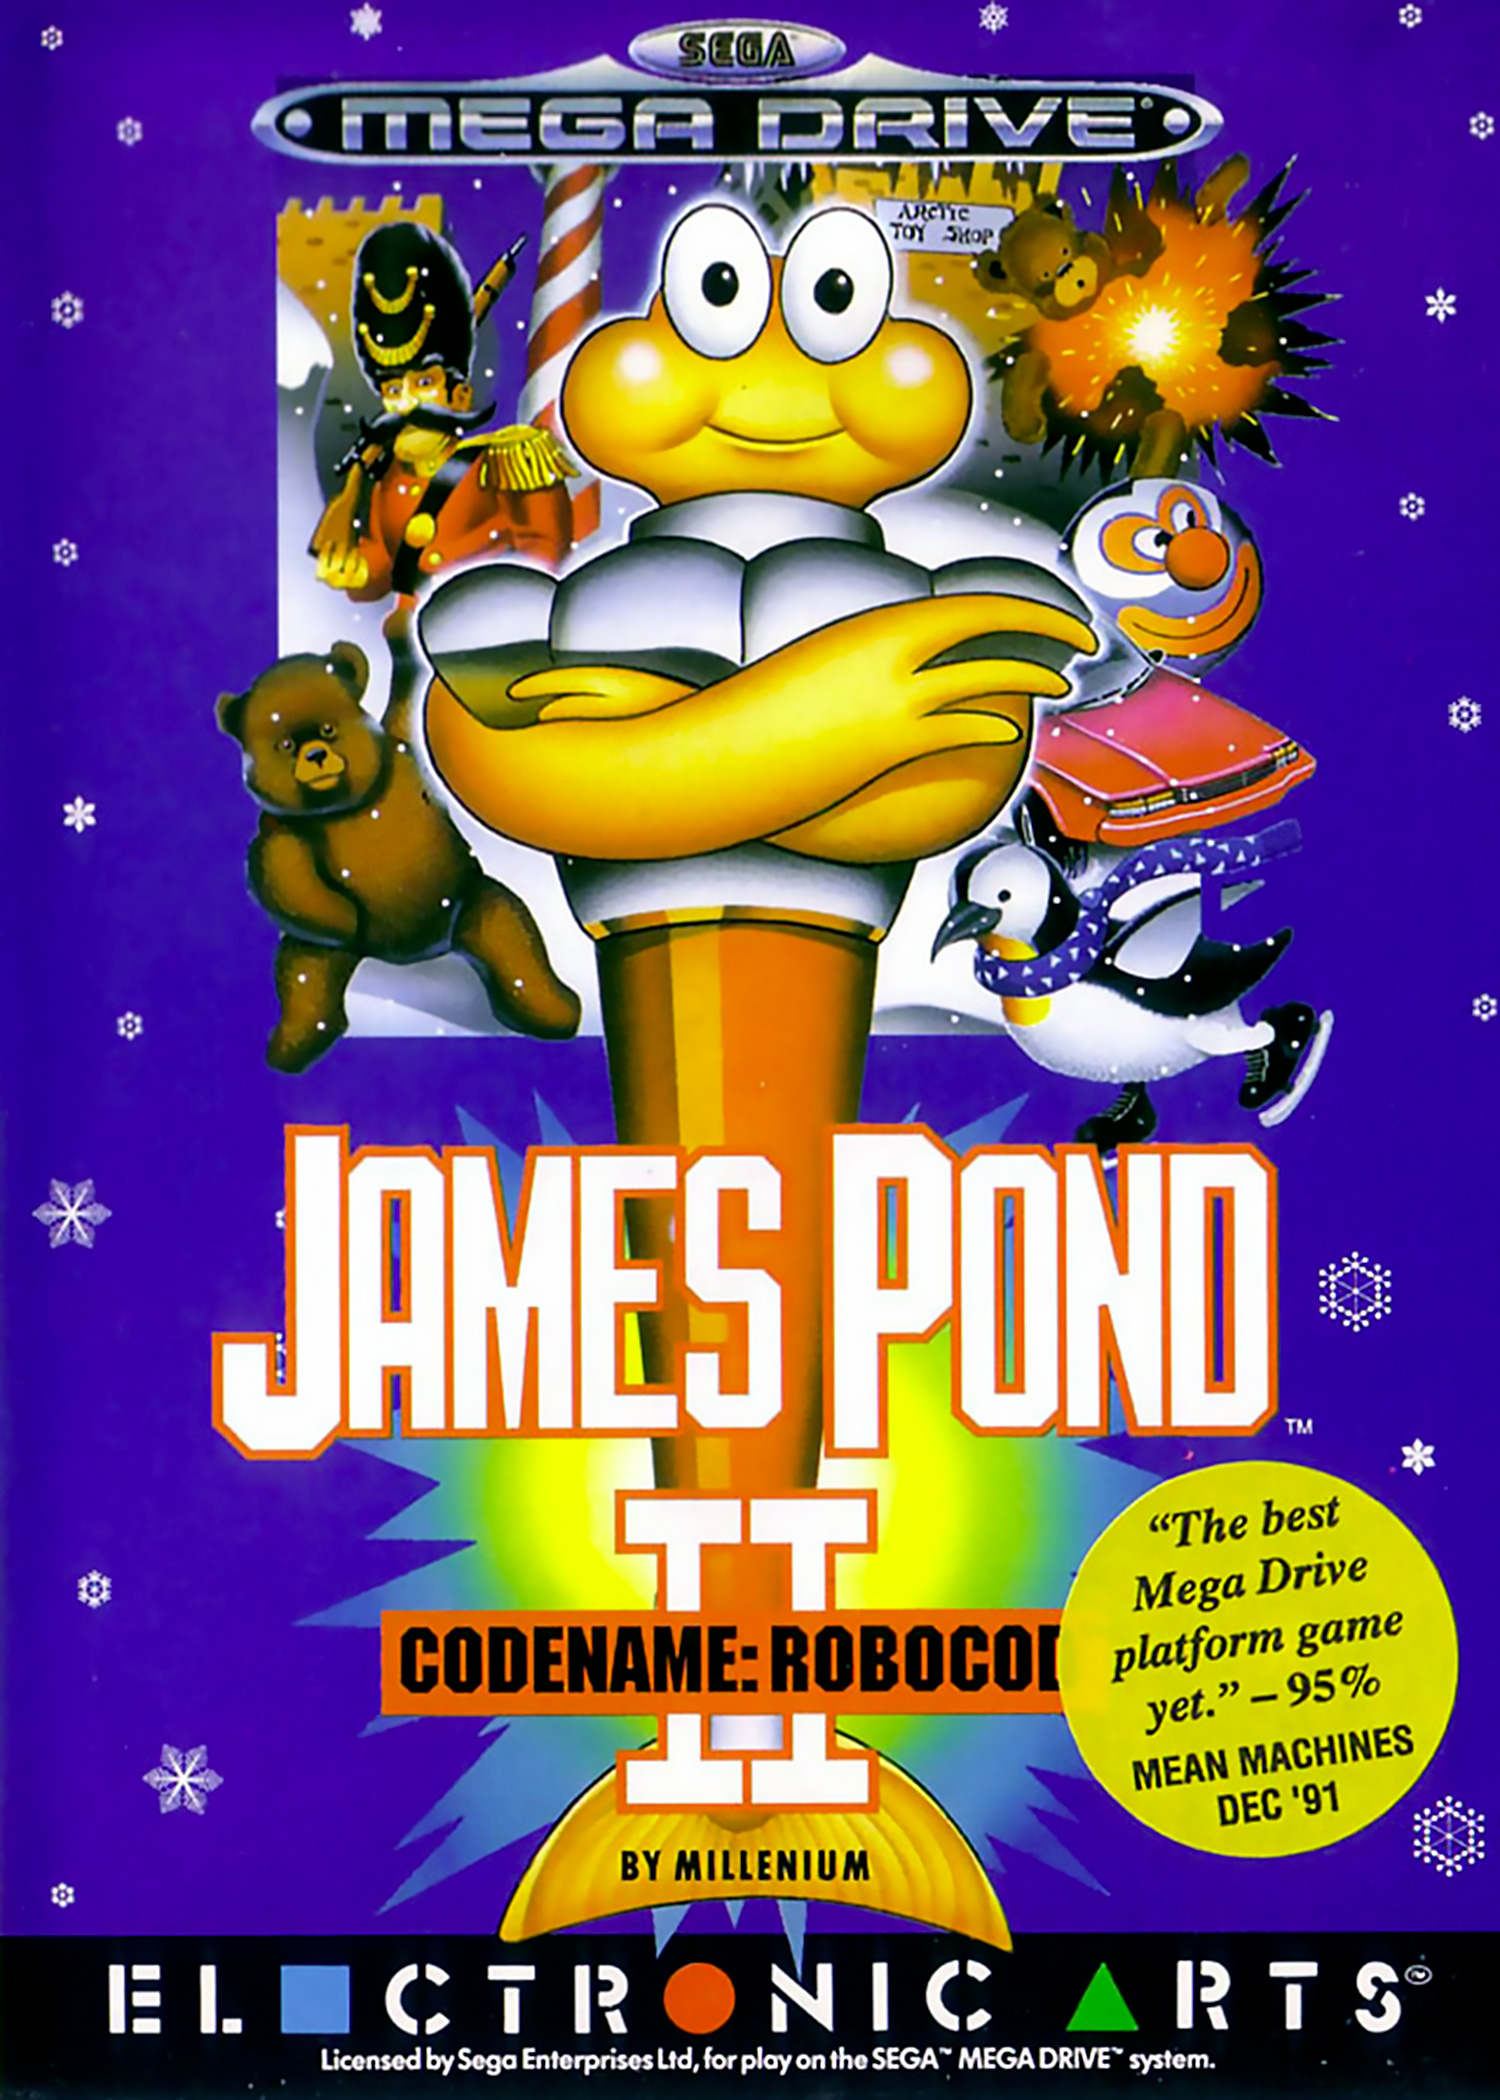 james-pond-2-codename-robocod-megadrive-00.jpg